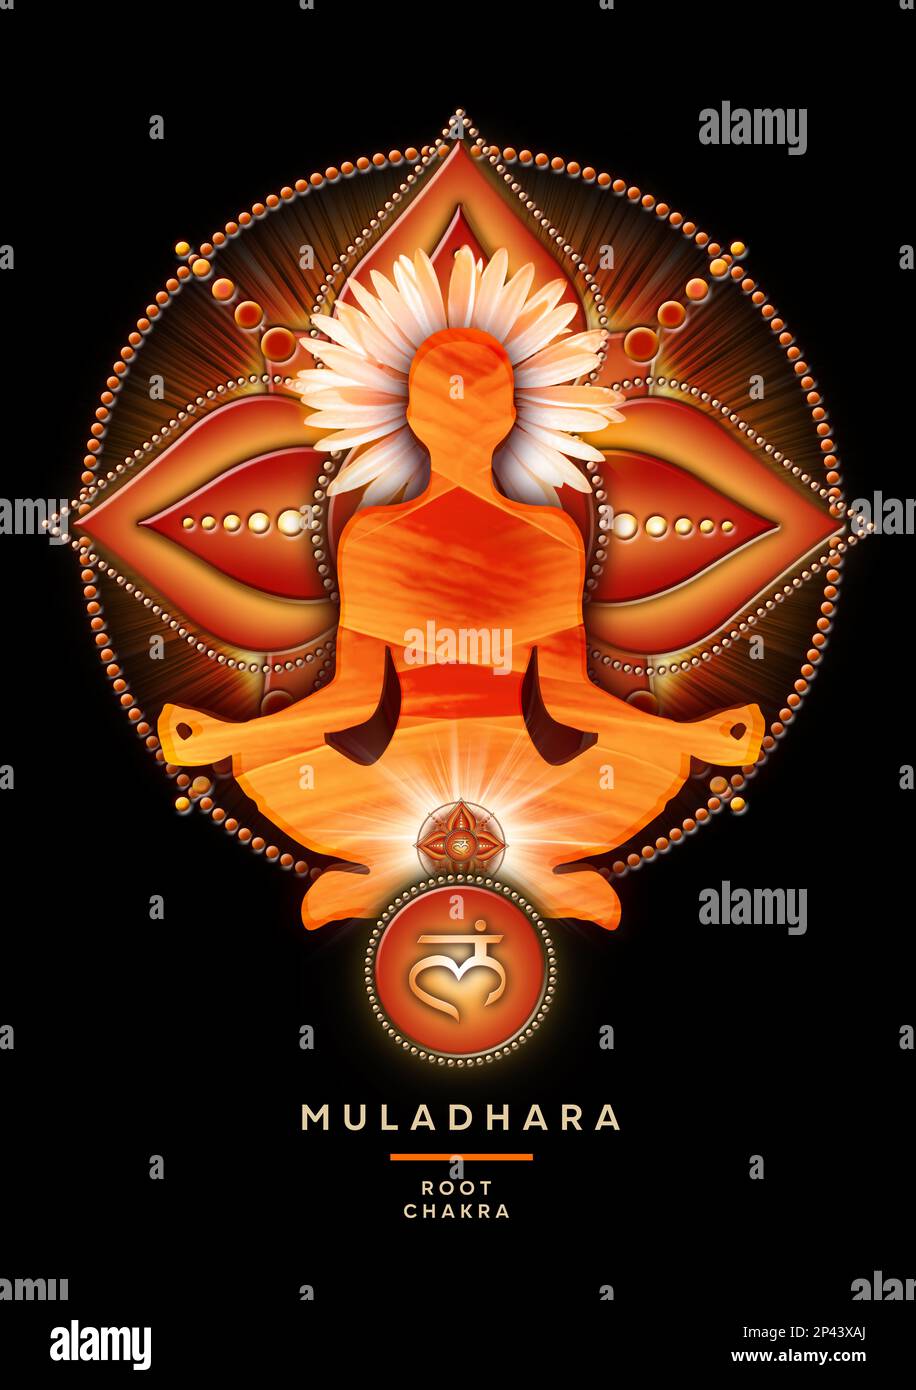 Root chakra meditation in yoga lotus pose, in front of muladhara chakra symbol. Stock Photo